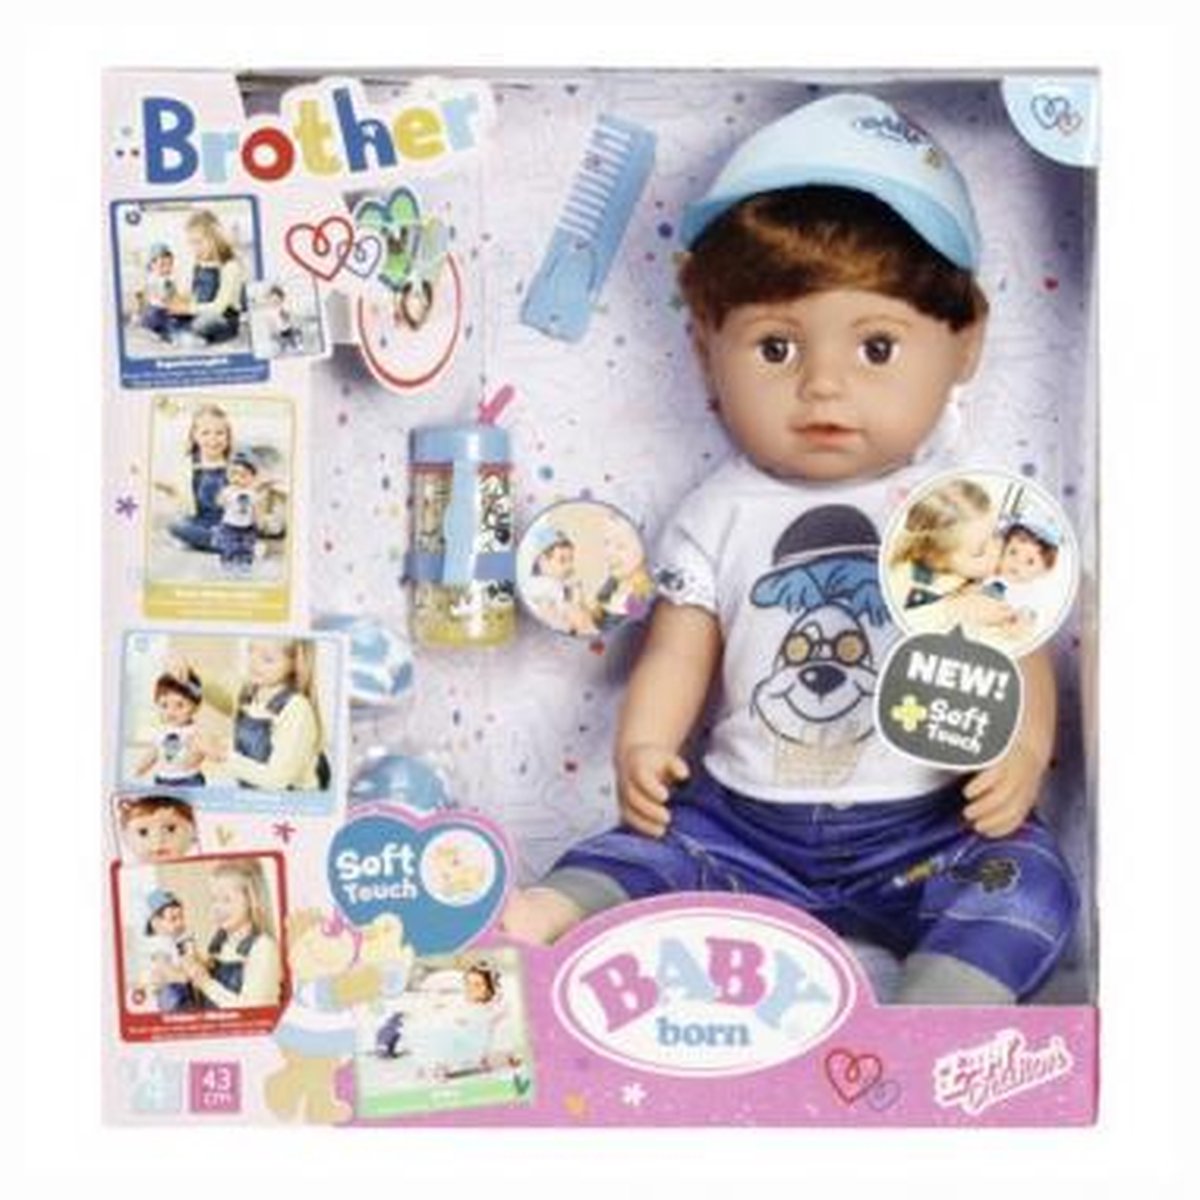 BABY born Soft Touch Broertje - Babypop - 43cm | bol.com